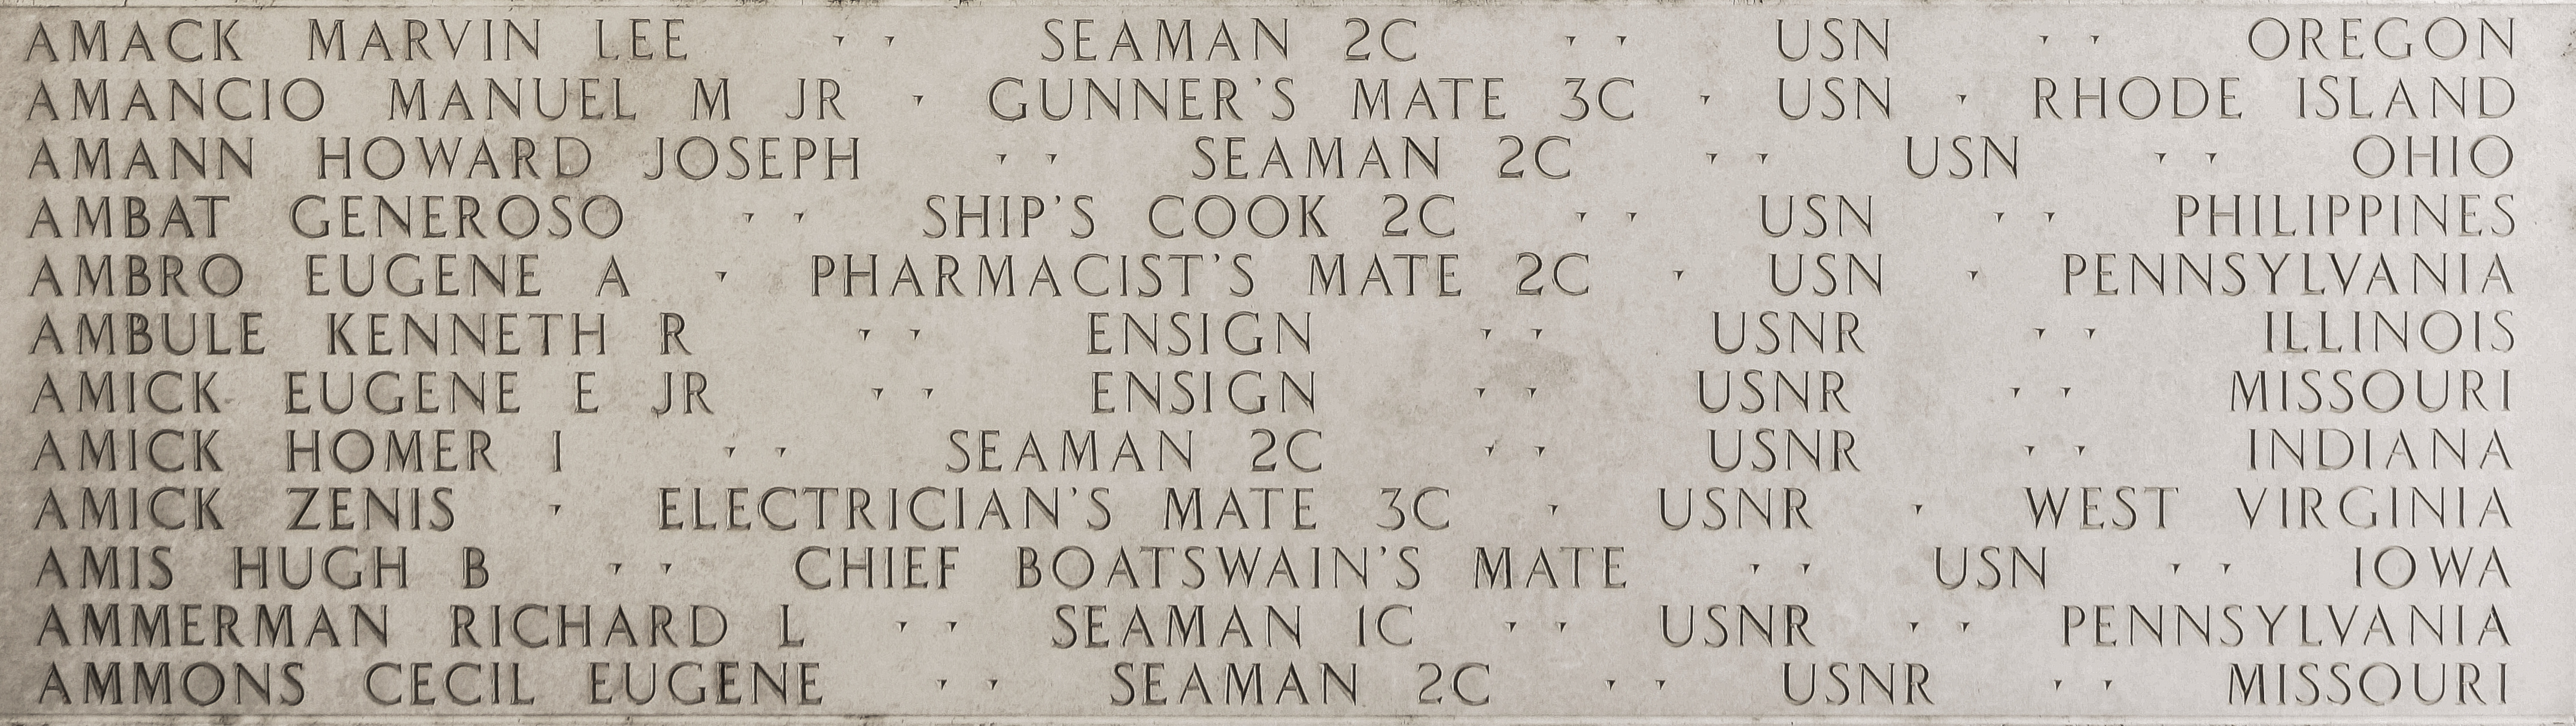 Hugh B. Amis, Chief Boatswain's Mate